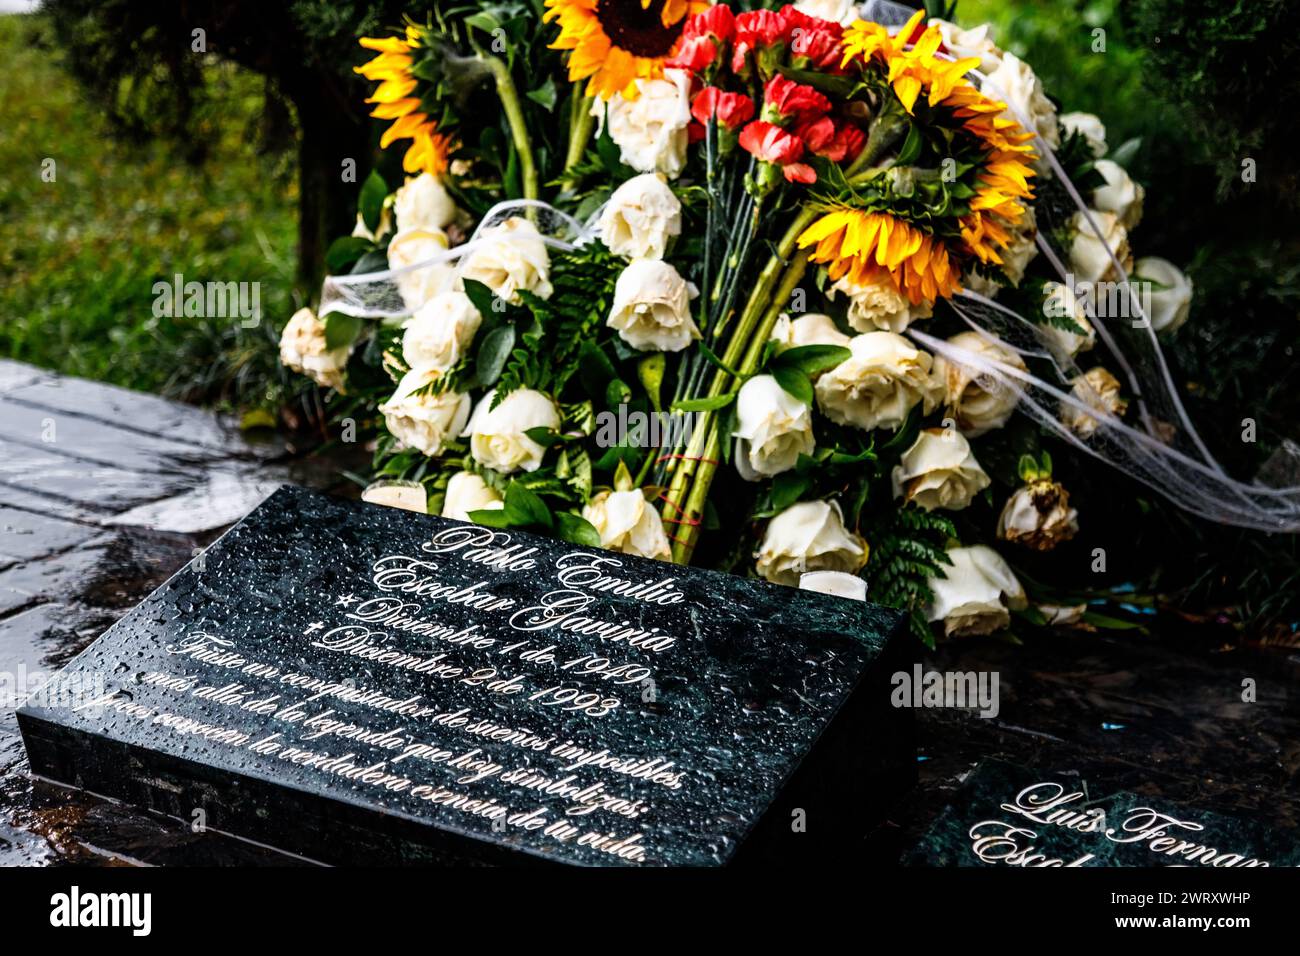 Medellin, Colombia - January 11, 2023: Close-up of Pablo Escobar Gaviria's tomb wet by rain Stock Photo